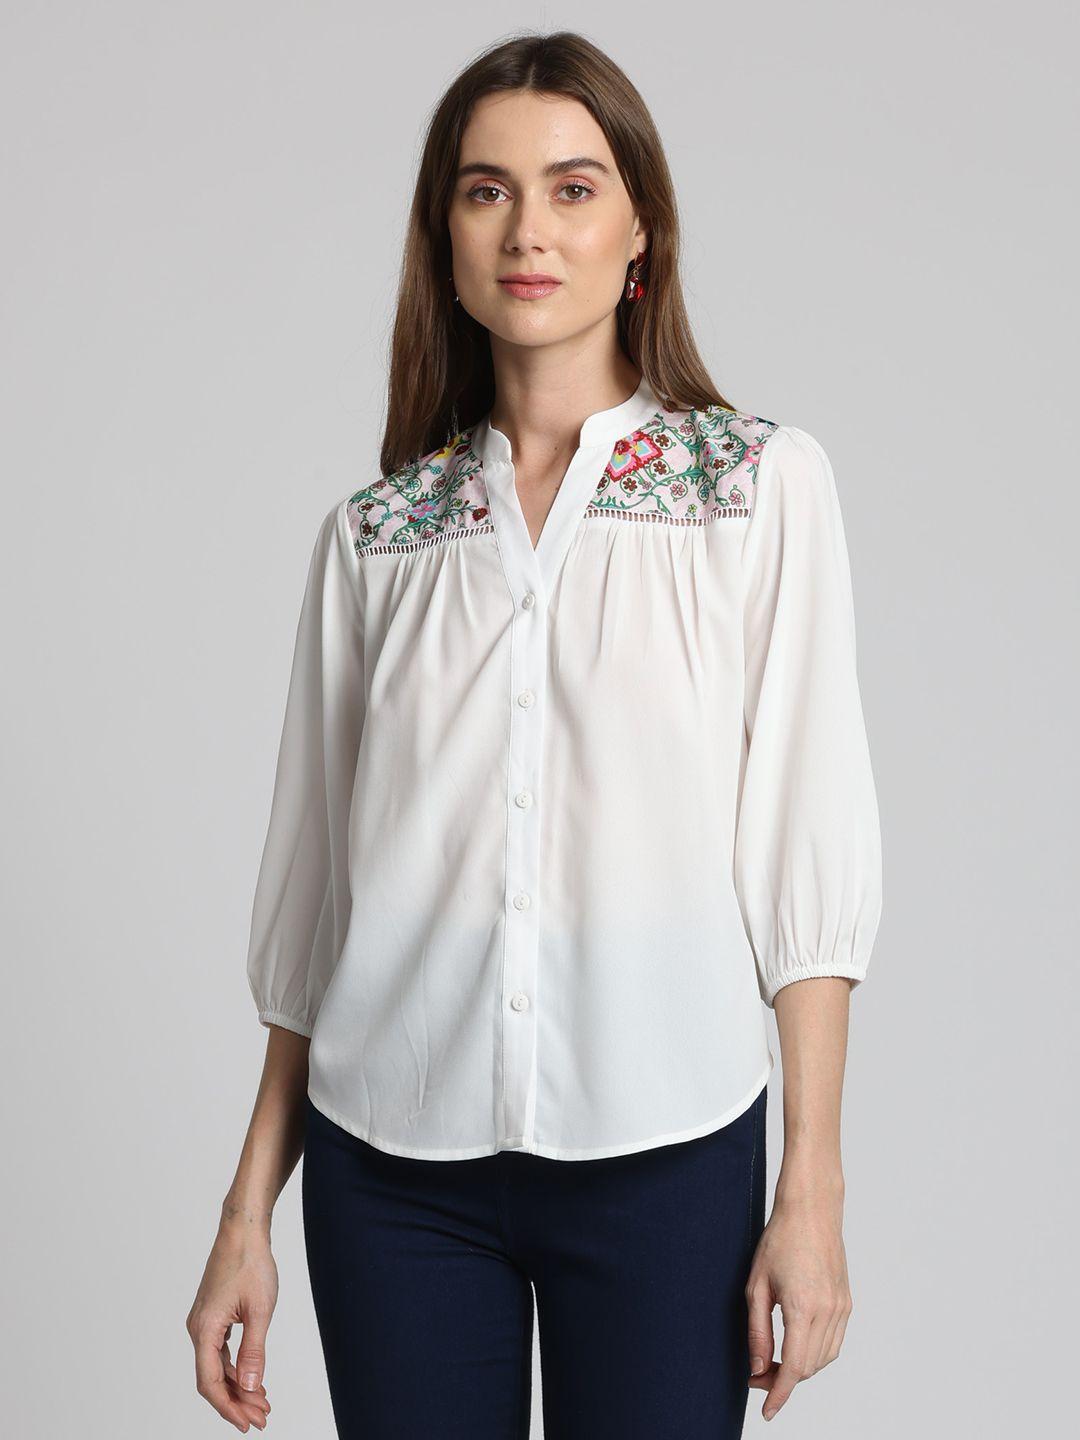 shaye floral printed mandarin collar cuffed sleeves gathered shirt style top